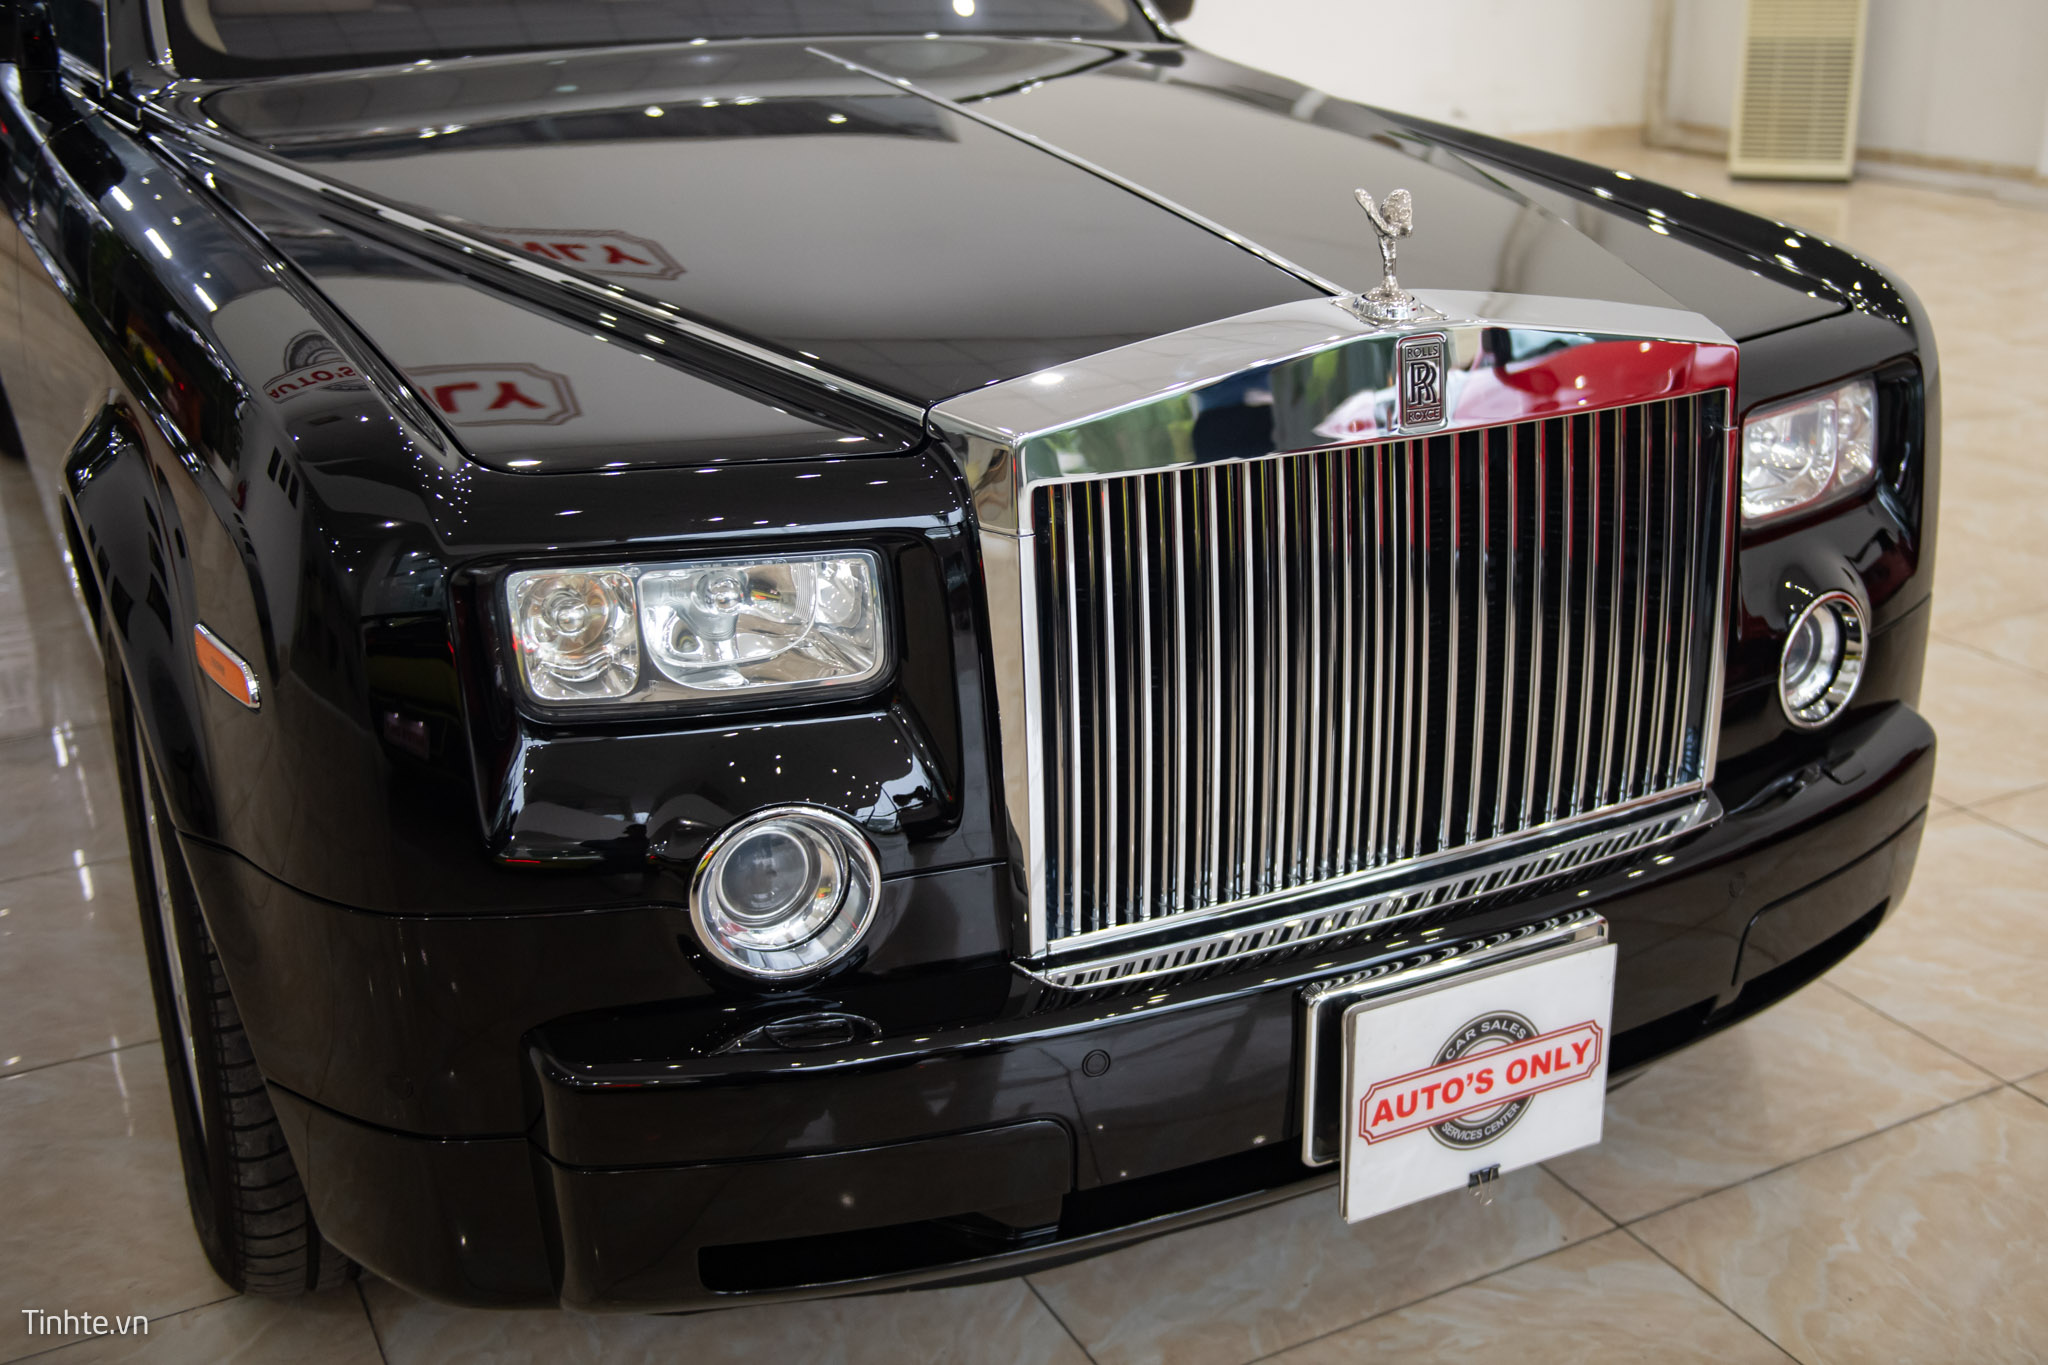 Bán xe RollsRoyce Phantom 2012 giá 20 tỷ  2007067